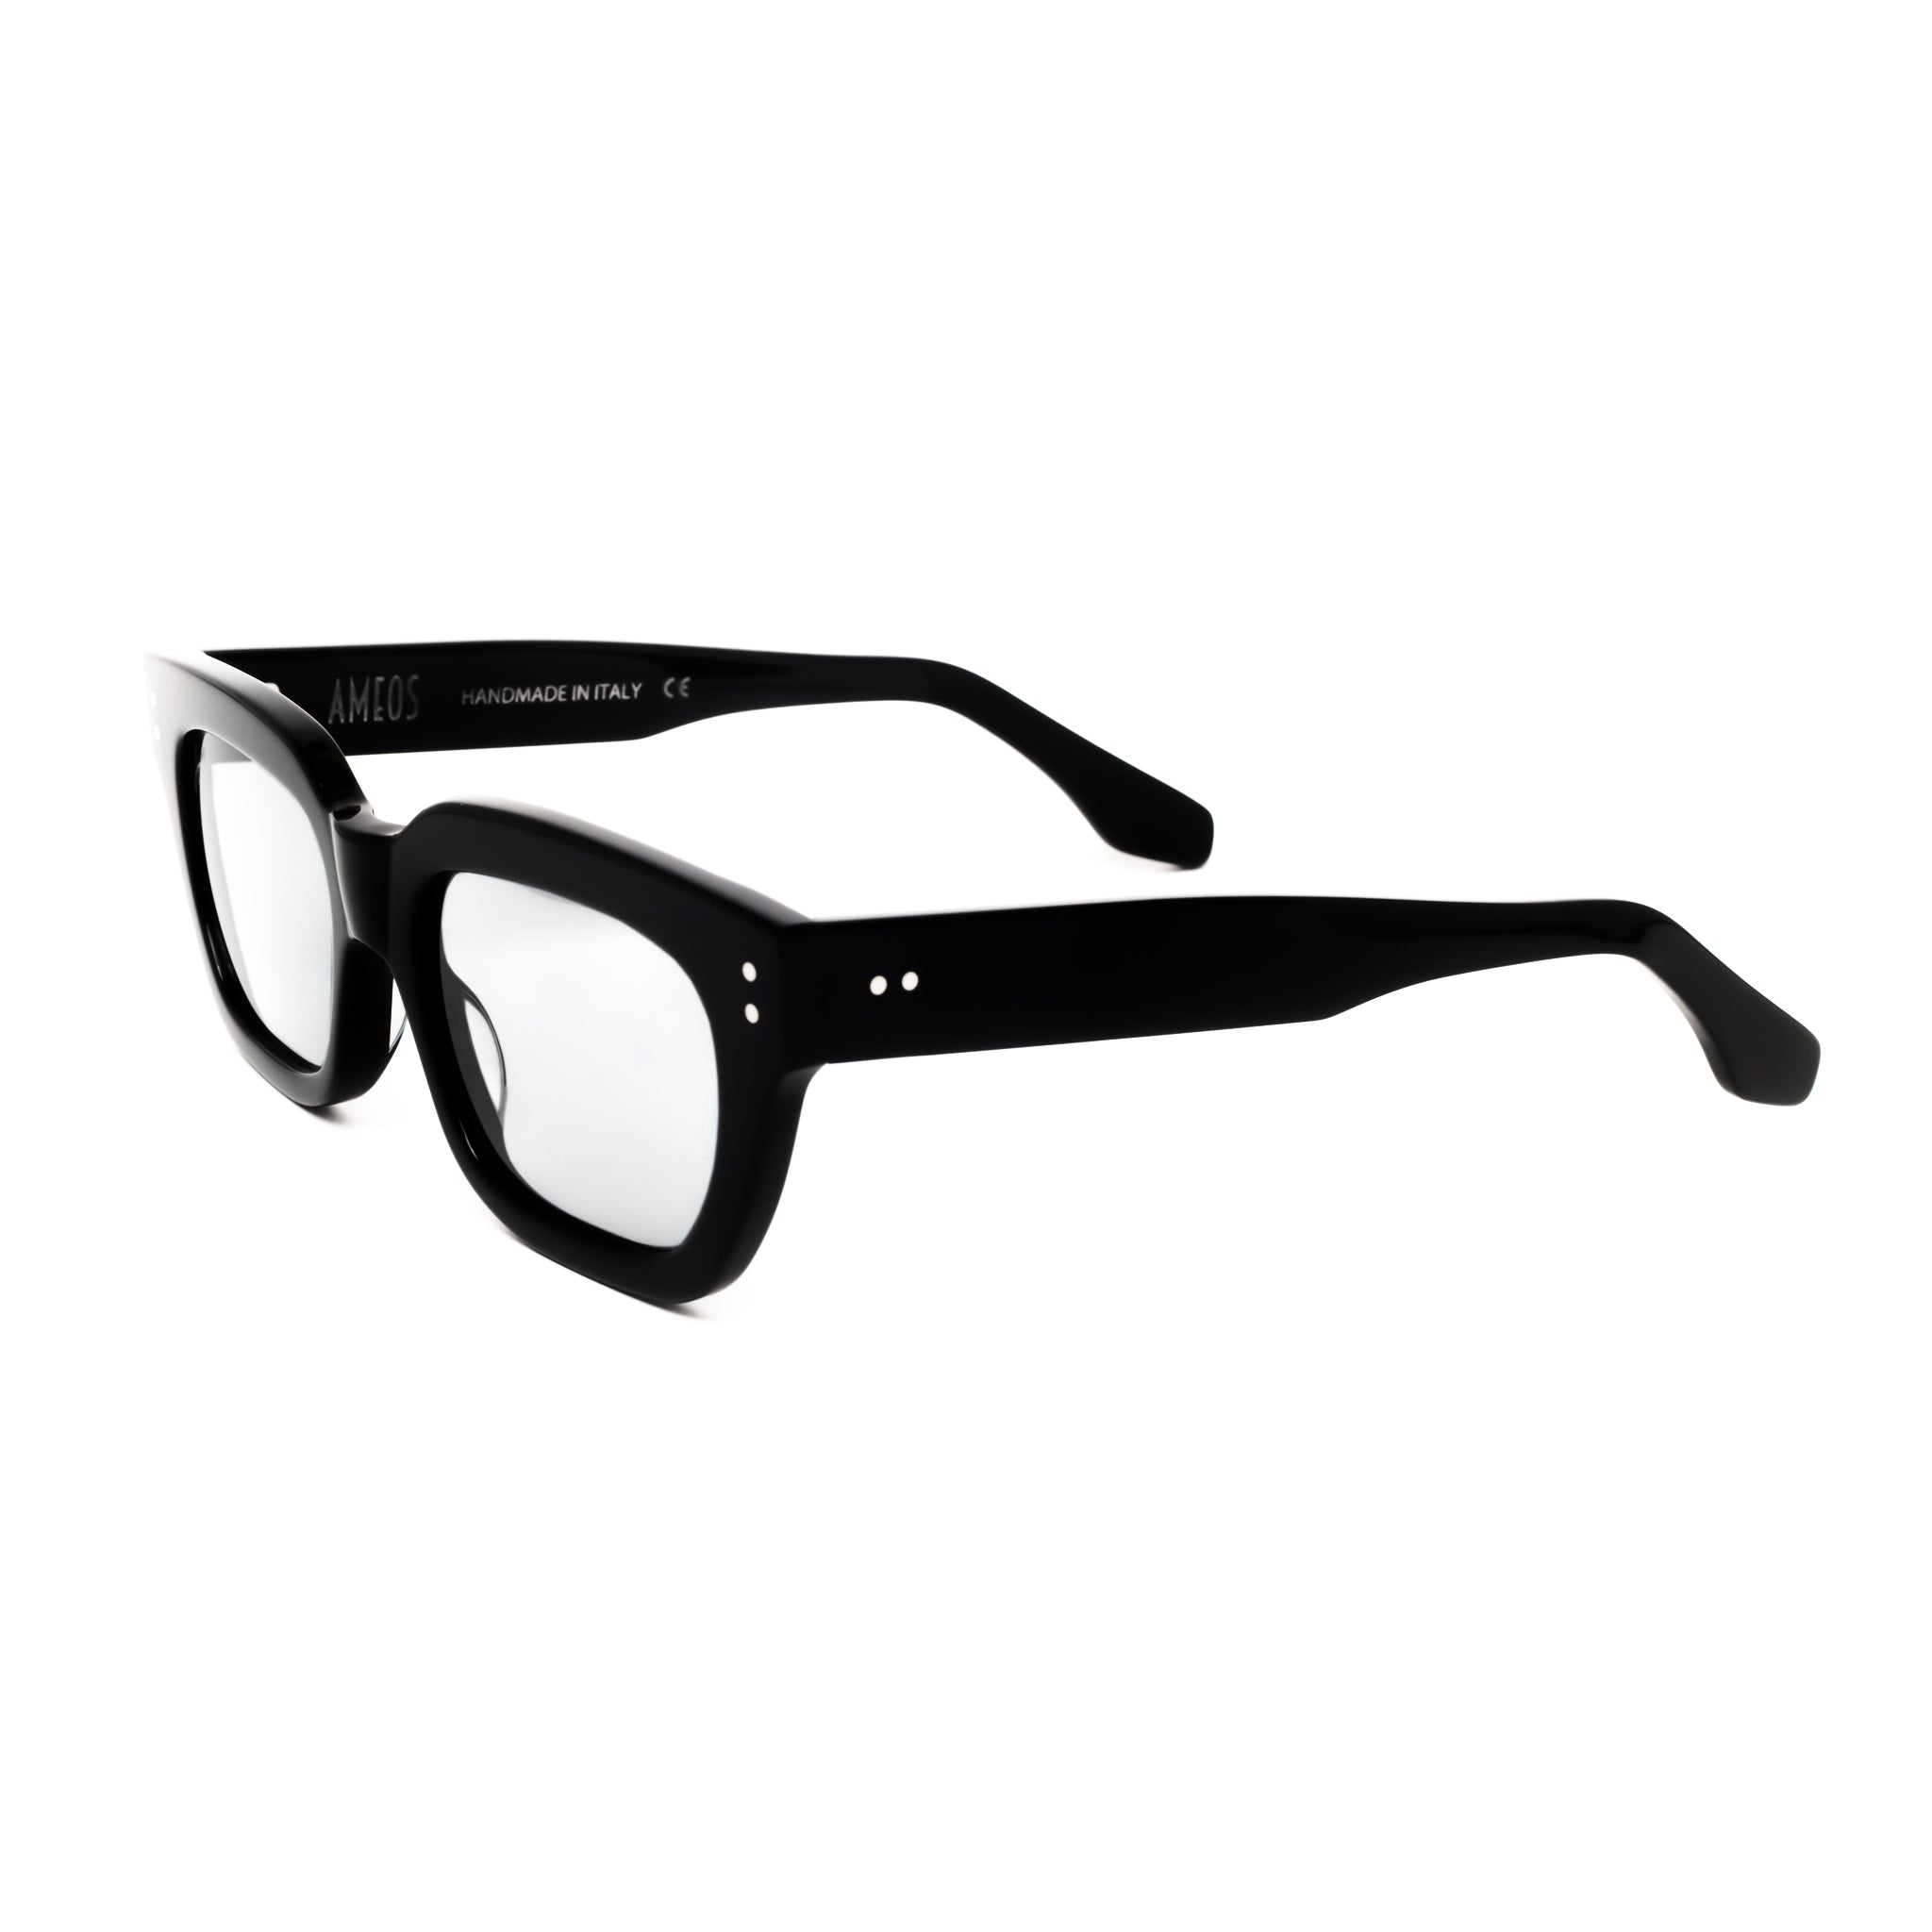 Ameos Forever collection Kai optical glasses.Black frames and unisex eyewear.